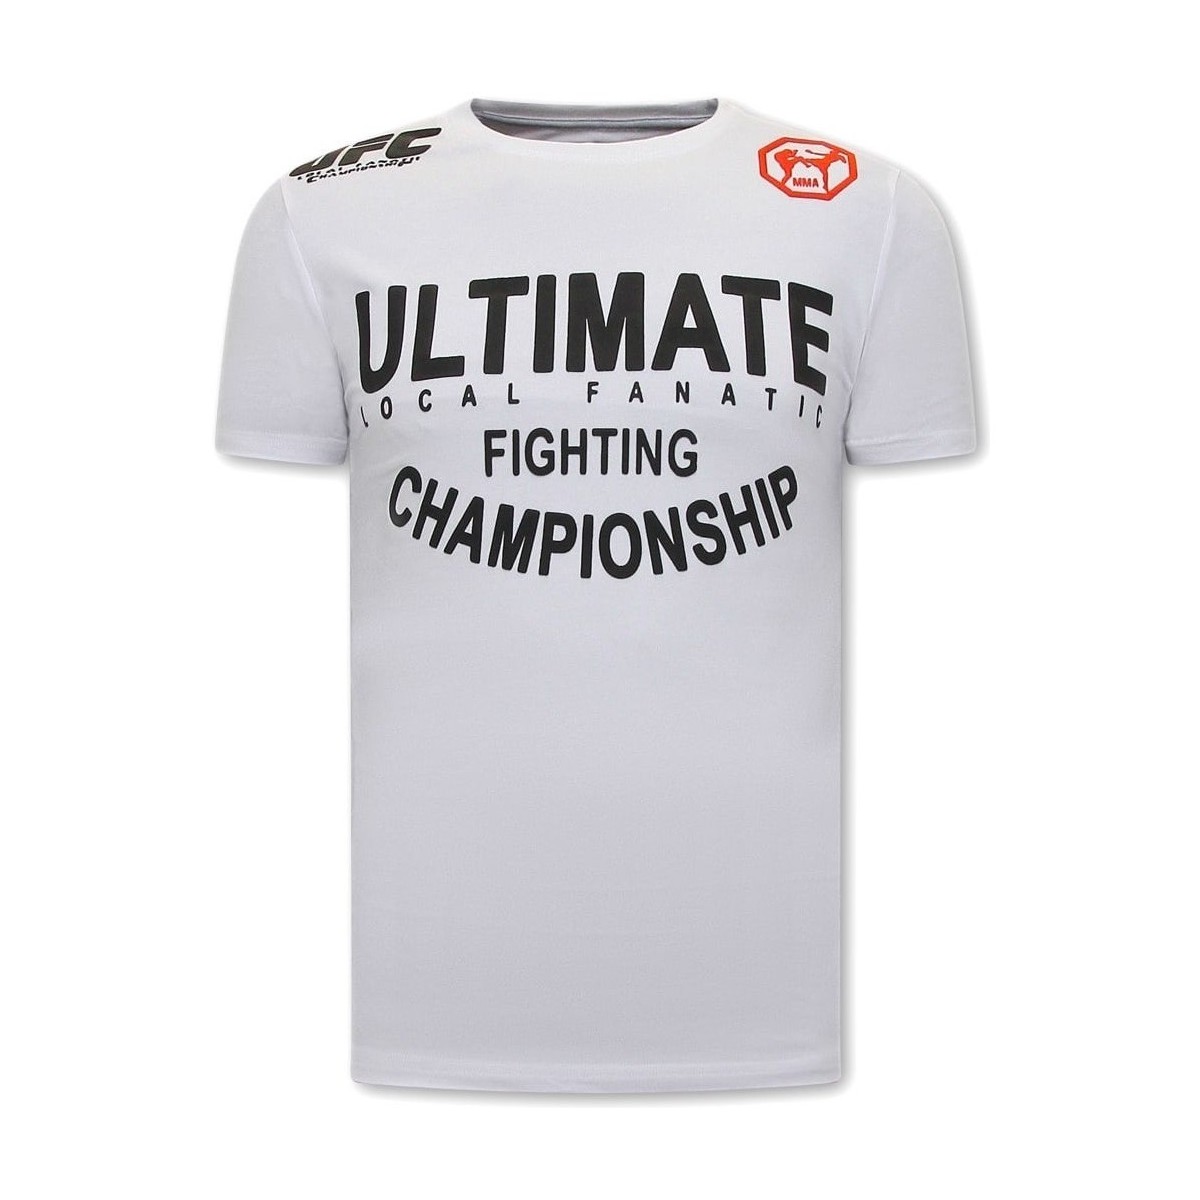 textil Herr T-shirts Local Fanatic Tryck UFC Ultimate Vit